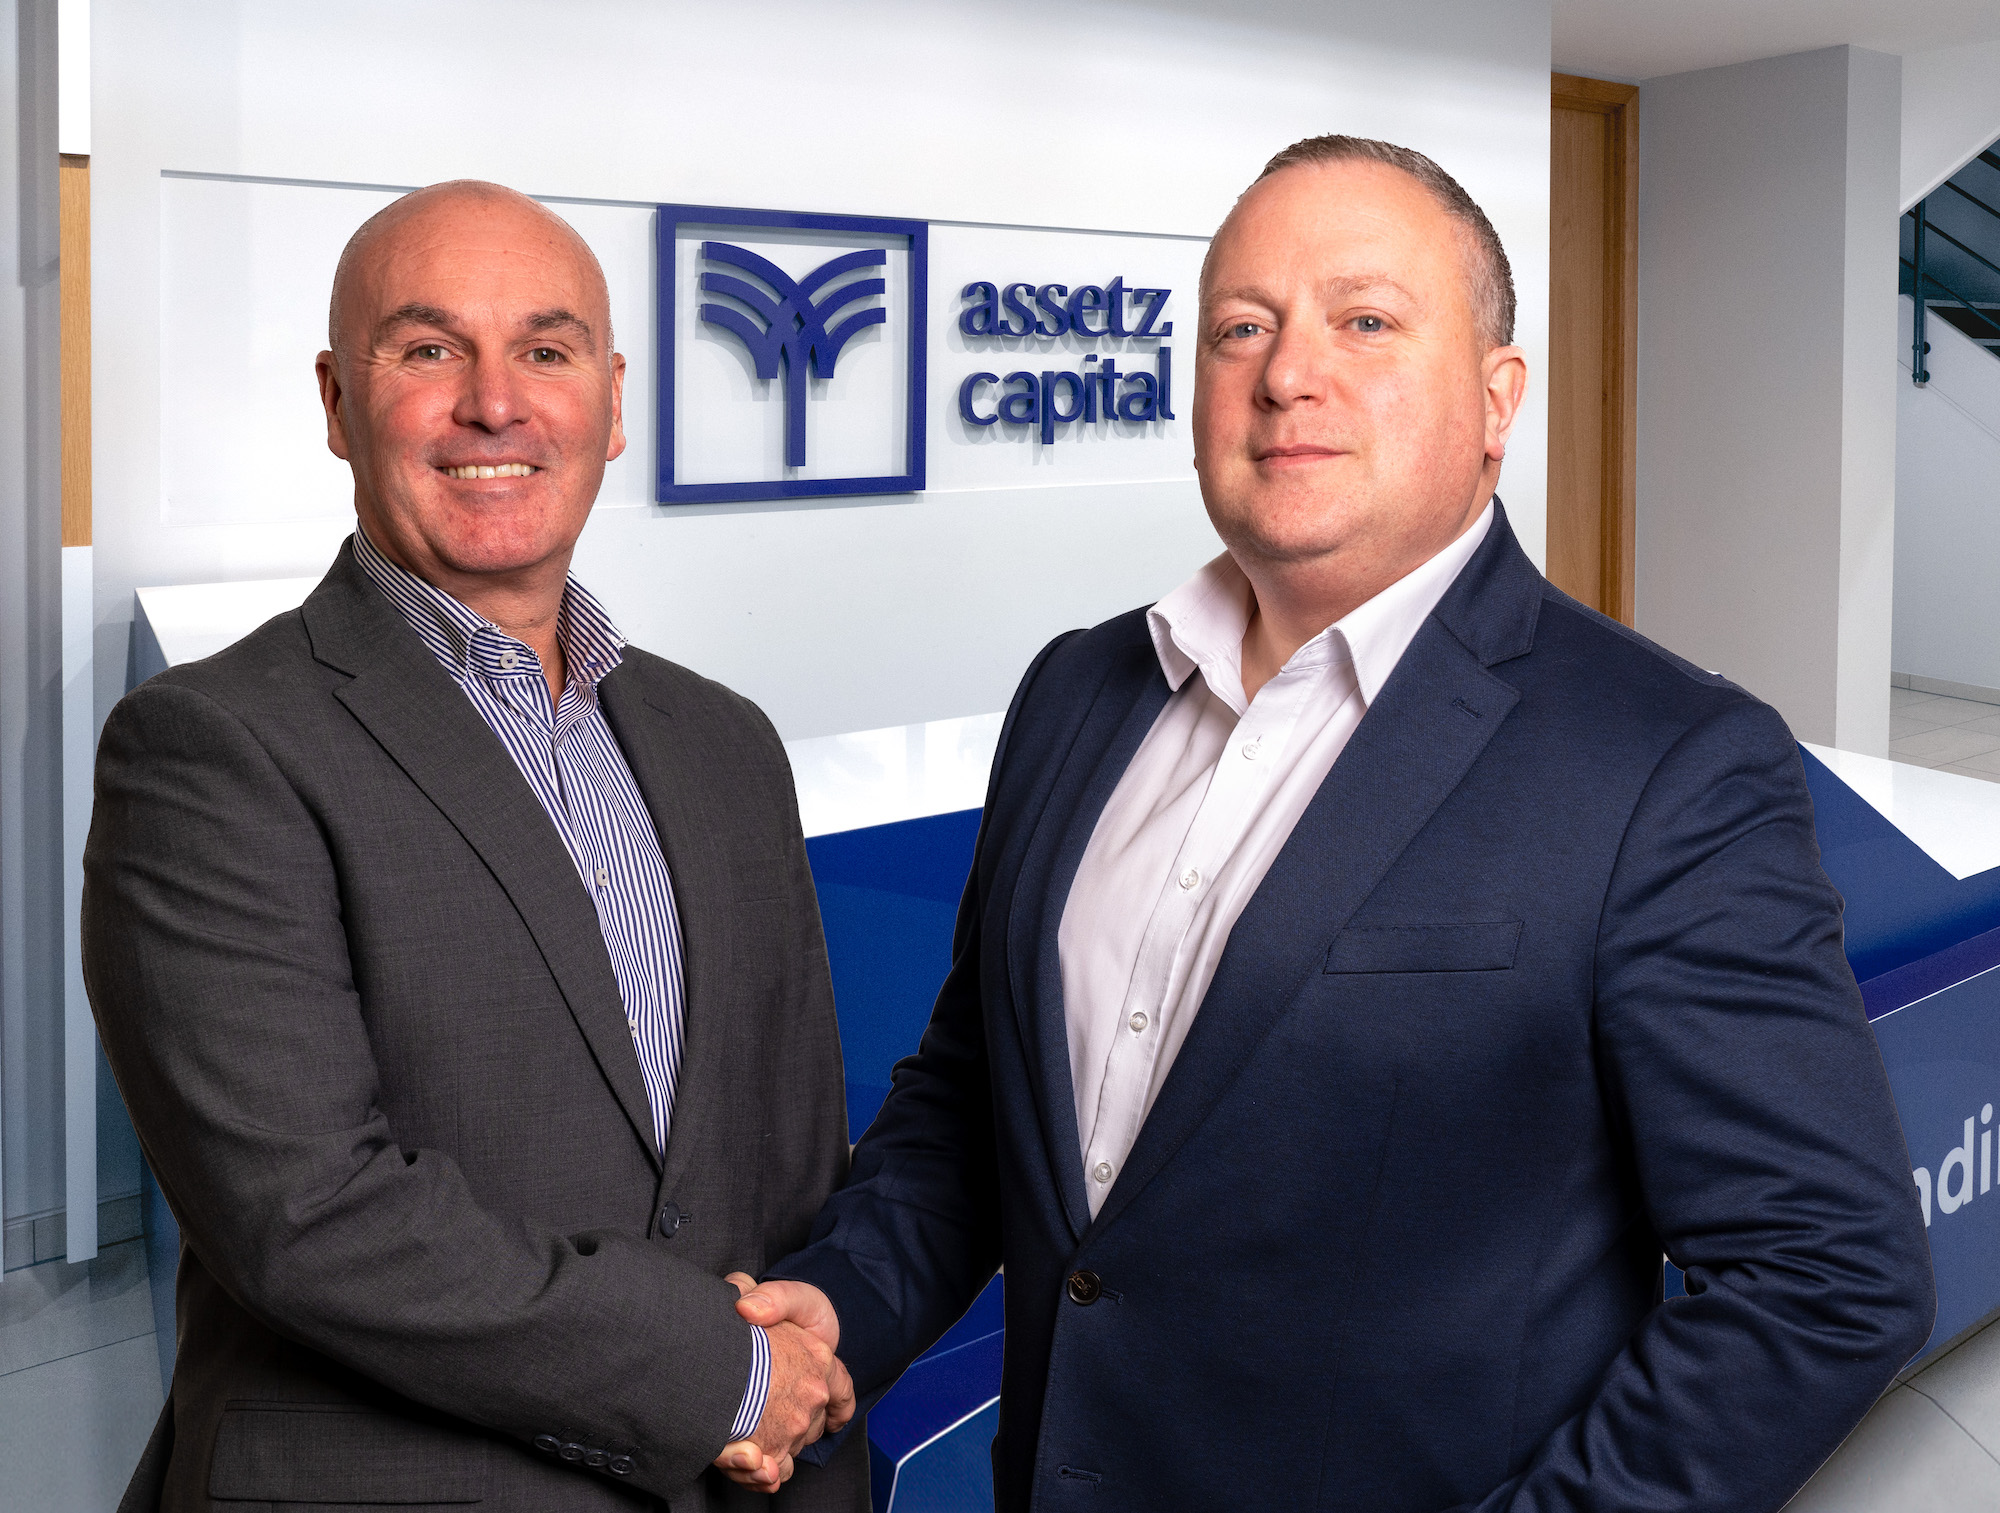 Geoff O'Brien rejoins Assetz Capital to spearhead £200m Scottish market lending goal